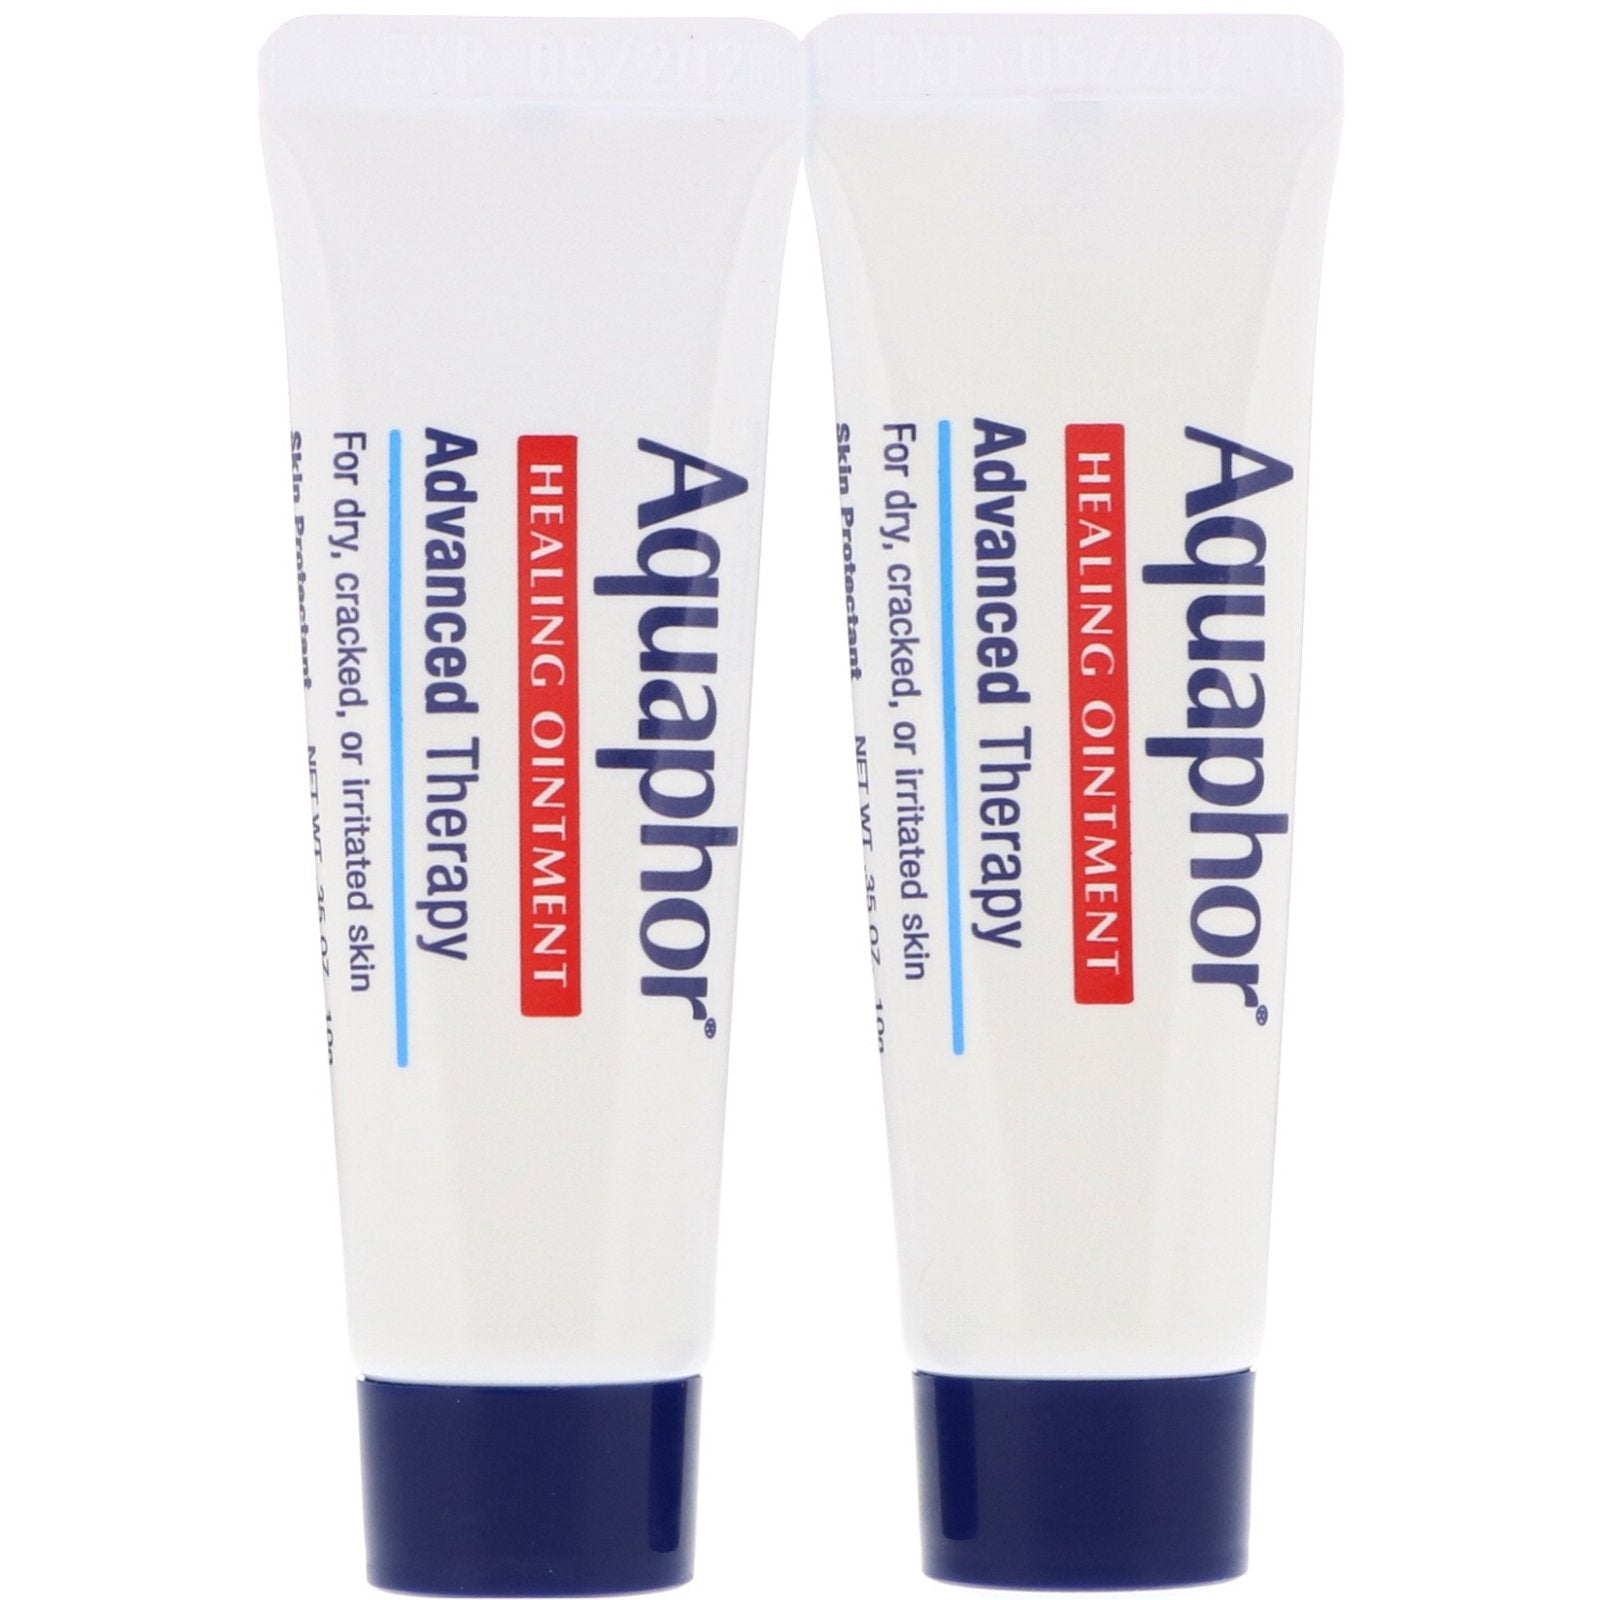 Aquaphor, Healing Ointment, Skin Protectant, 2 Tubes, 0.35 oz (10 g) Each